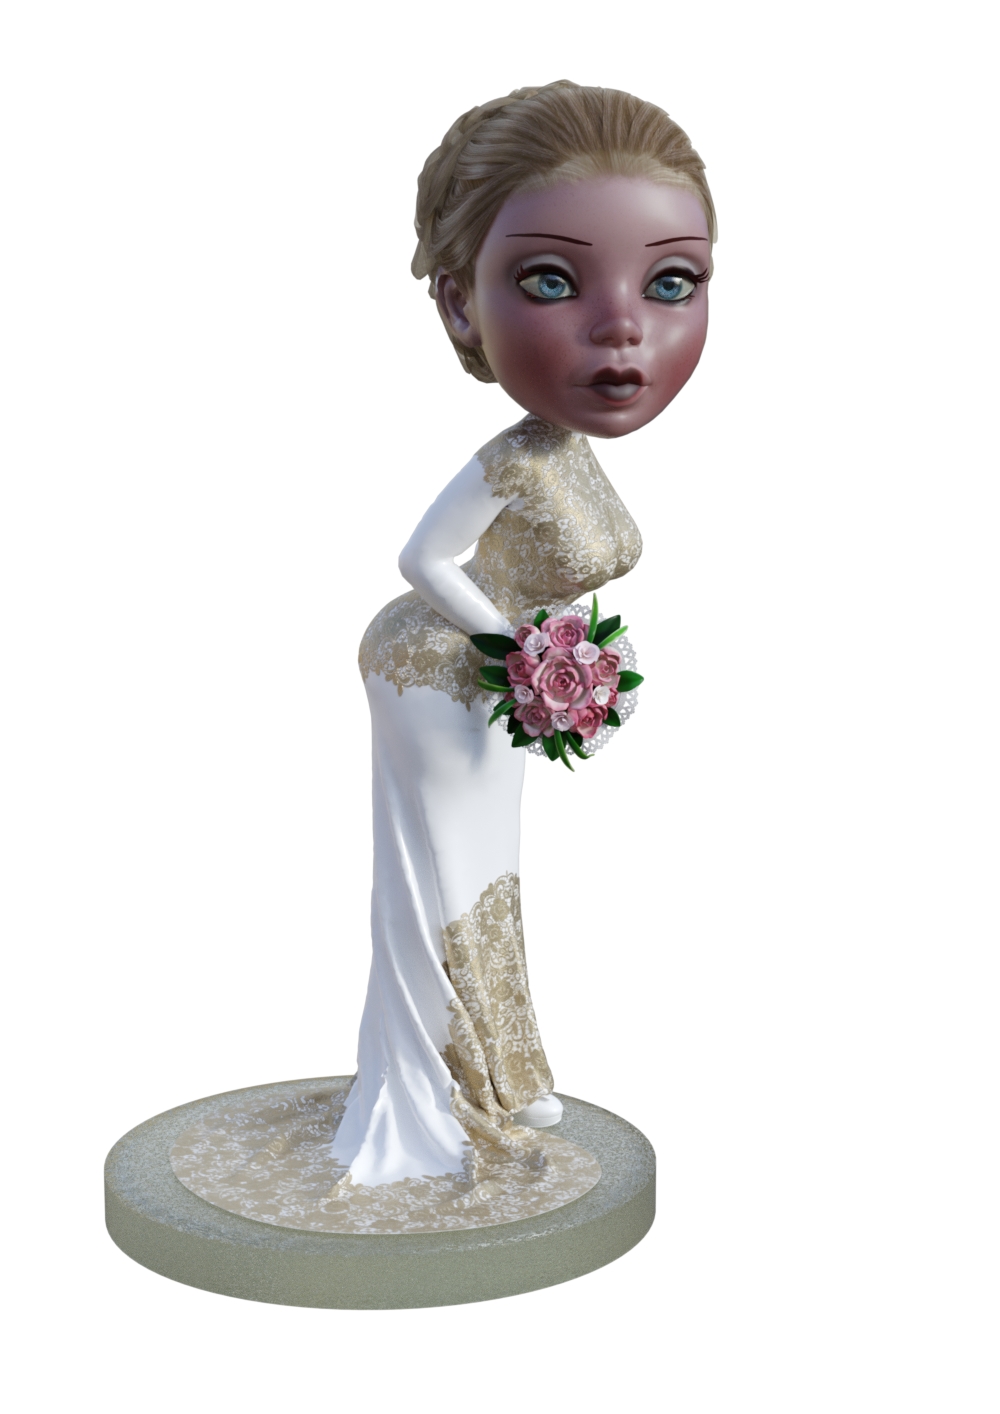 BobbleHead Bride, by L'Adair